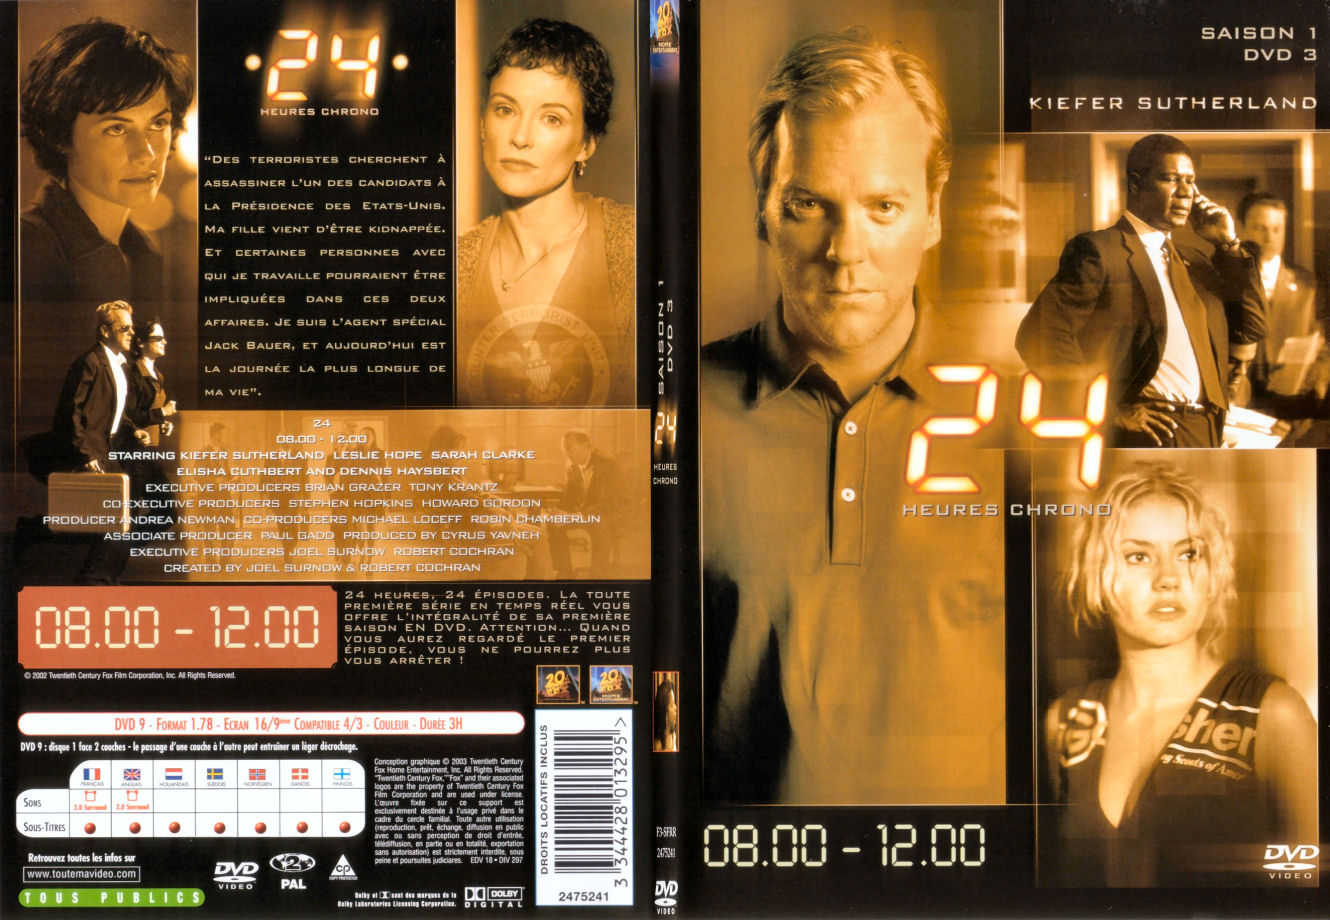 Jaquette DVD 24 heures chrono Saison 1 dvd 3 - SLIM